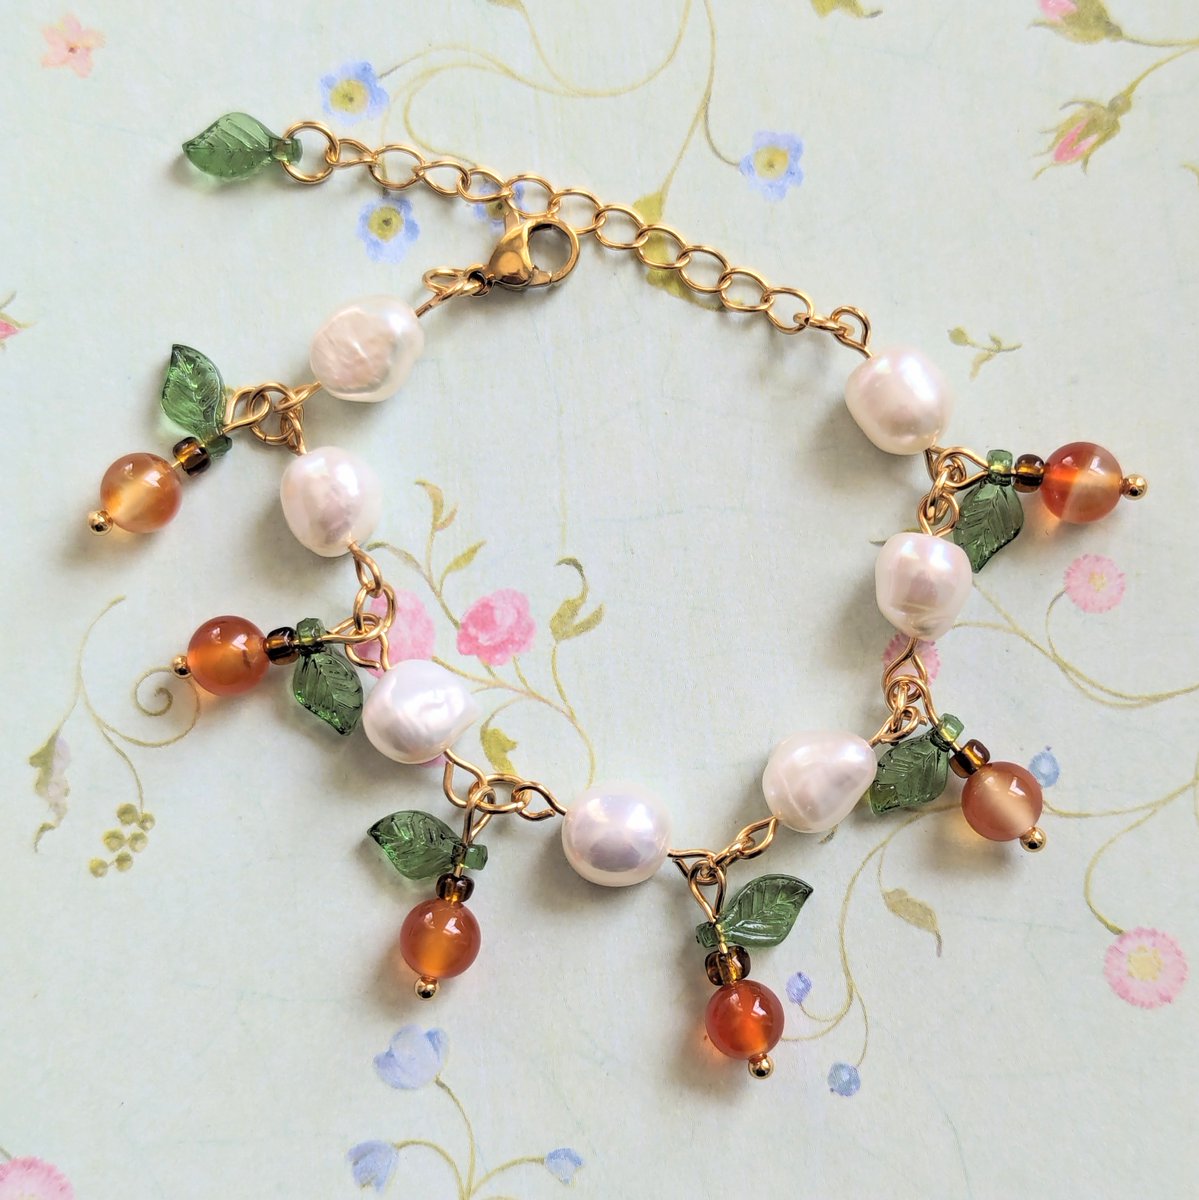 Tangerine necklace and bracelet 🍊